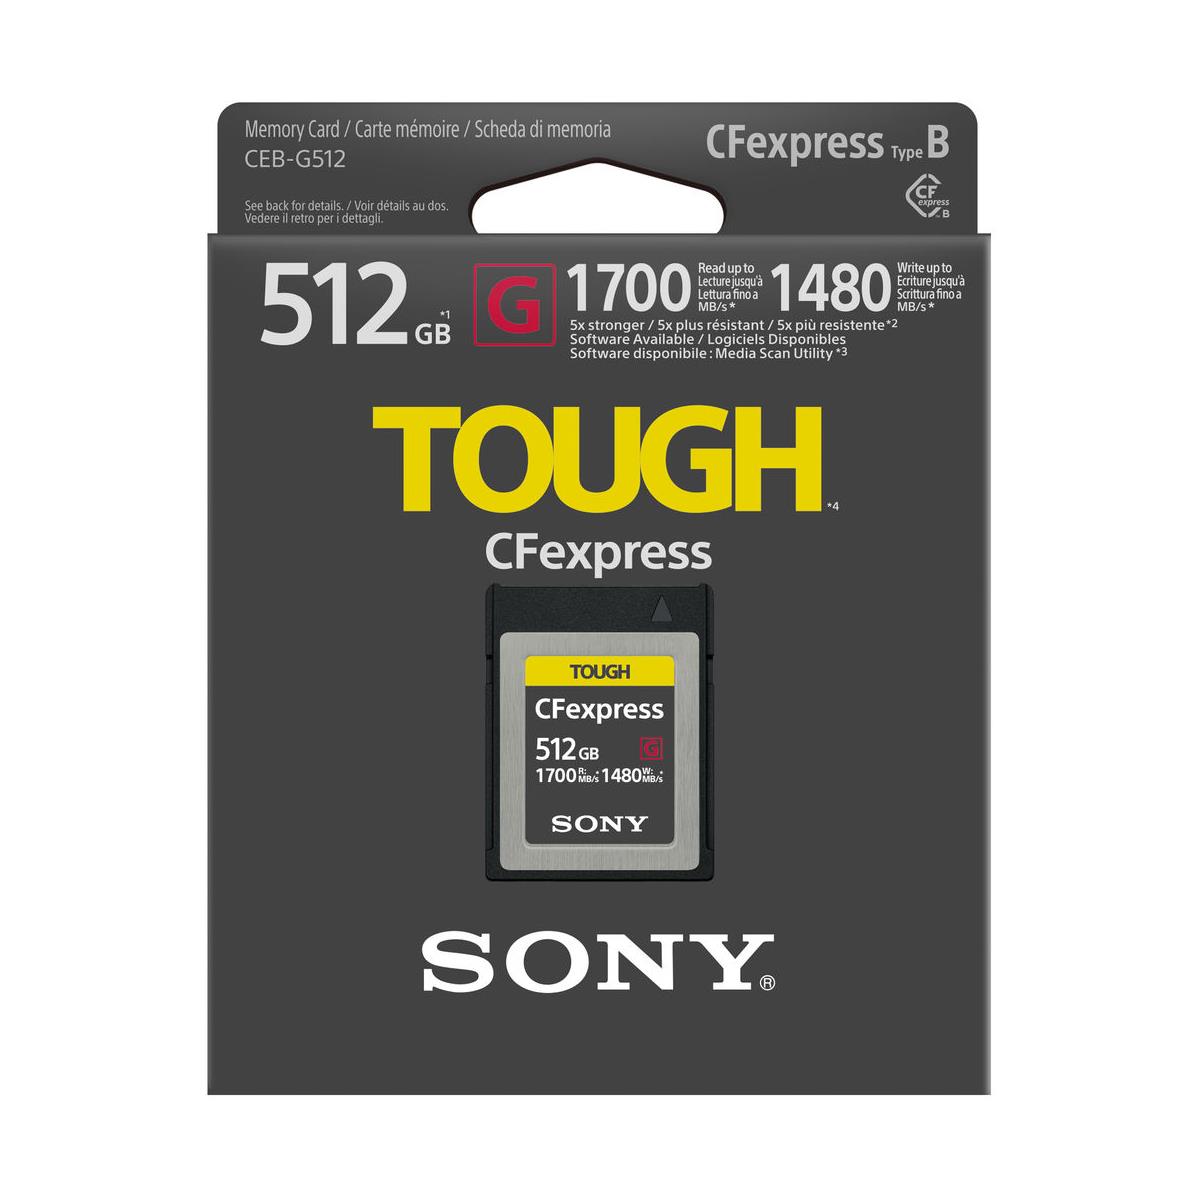 Sony 512GB CFexpress Type B Tough Memory Card, 1700 MB/s Read, 1480 MB/s  Write